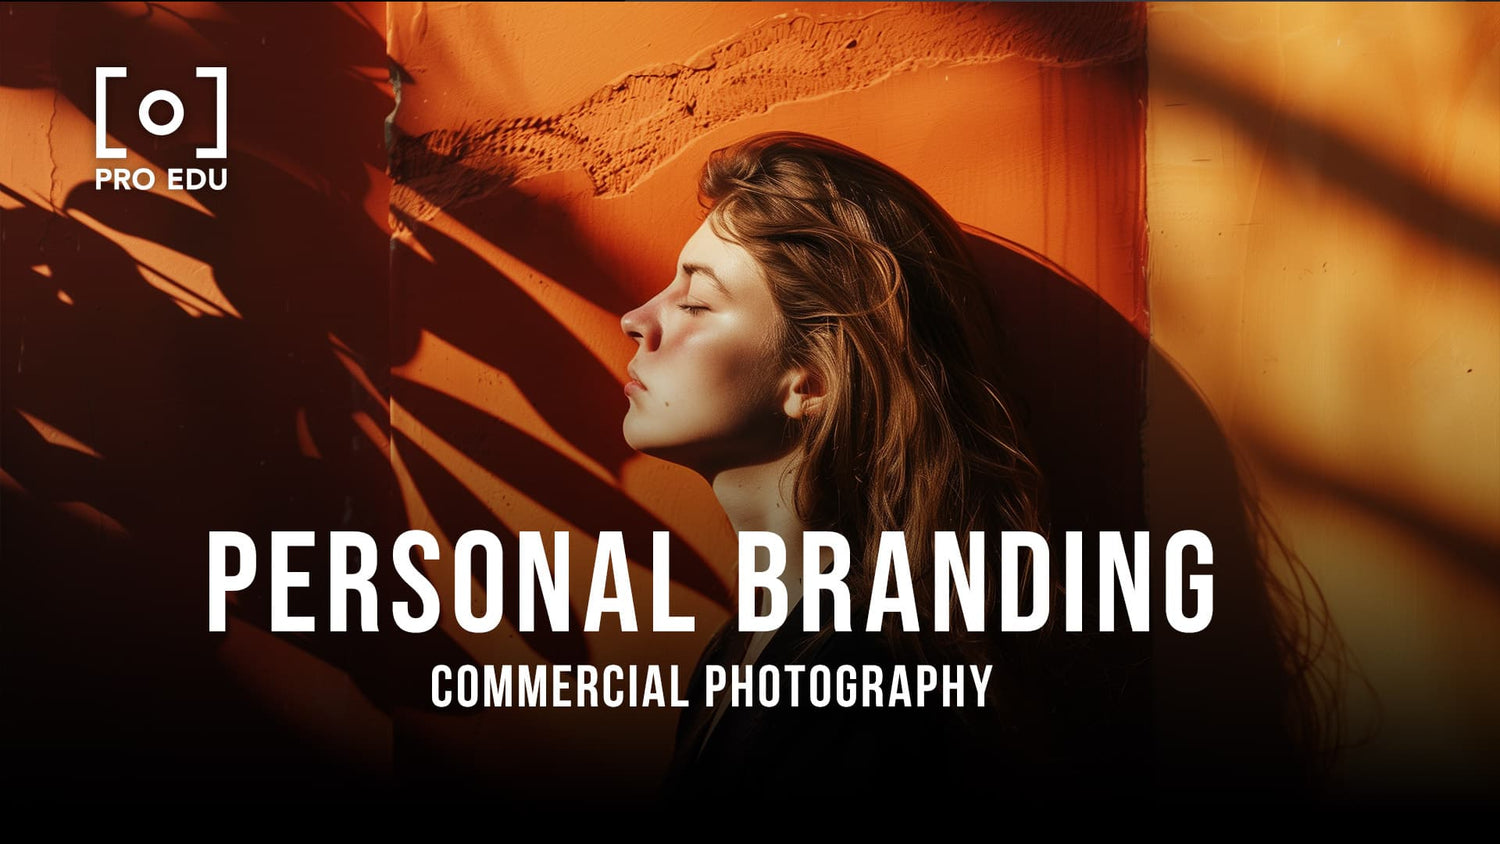 A professional photographer showcasing brand identity